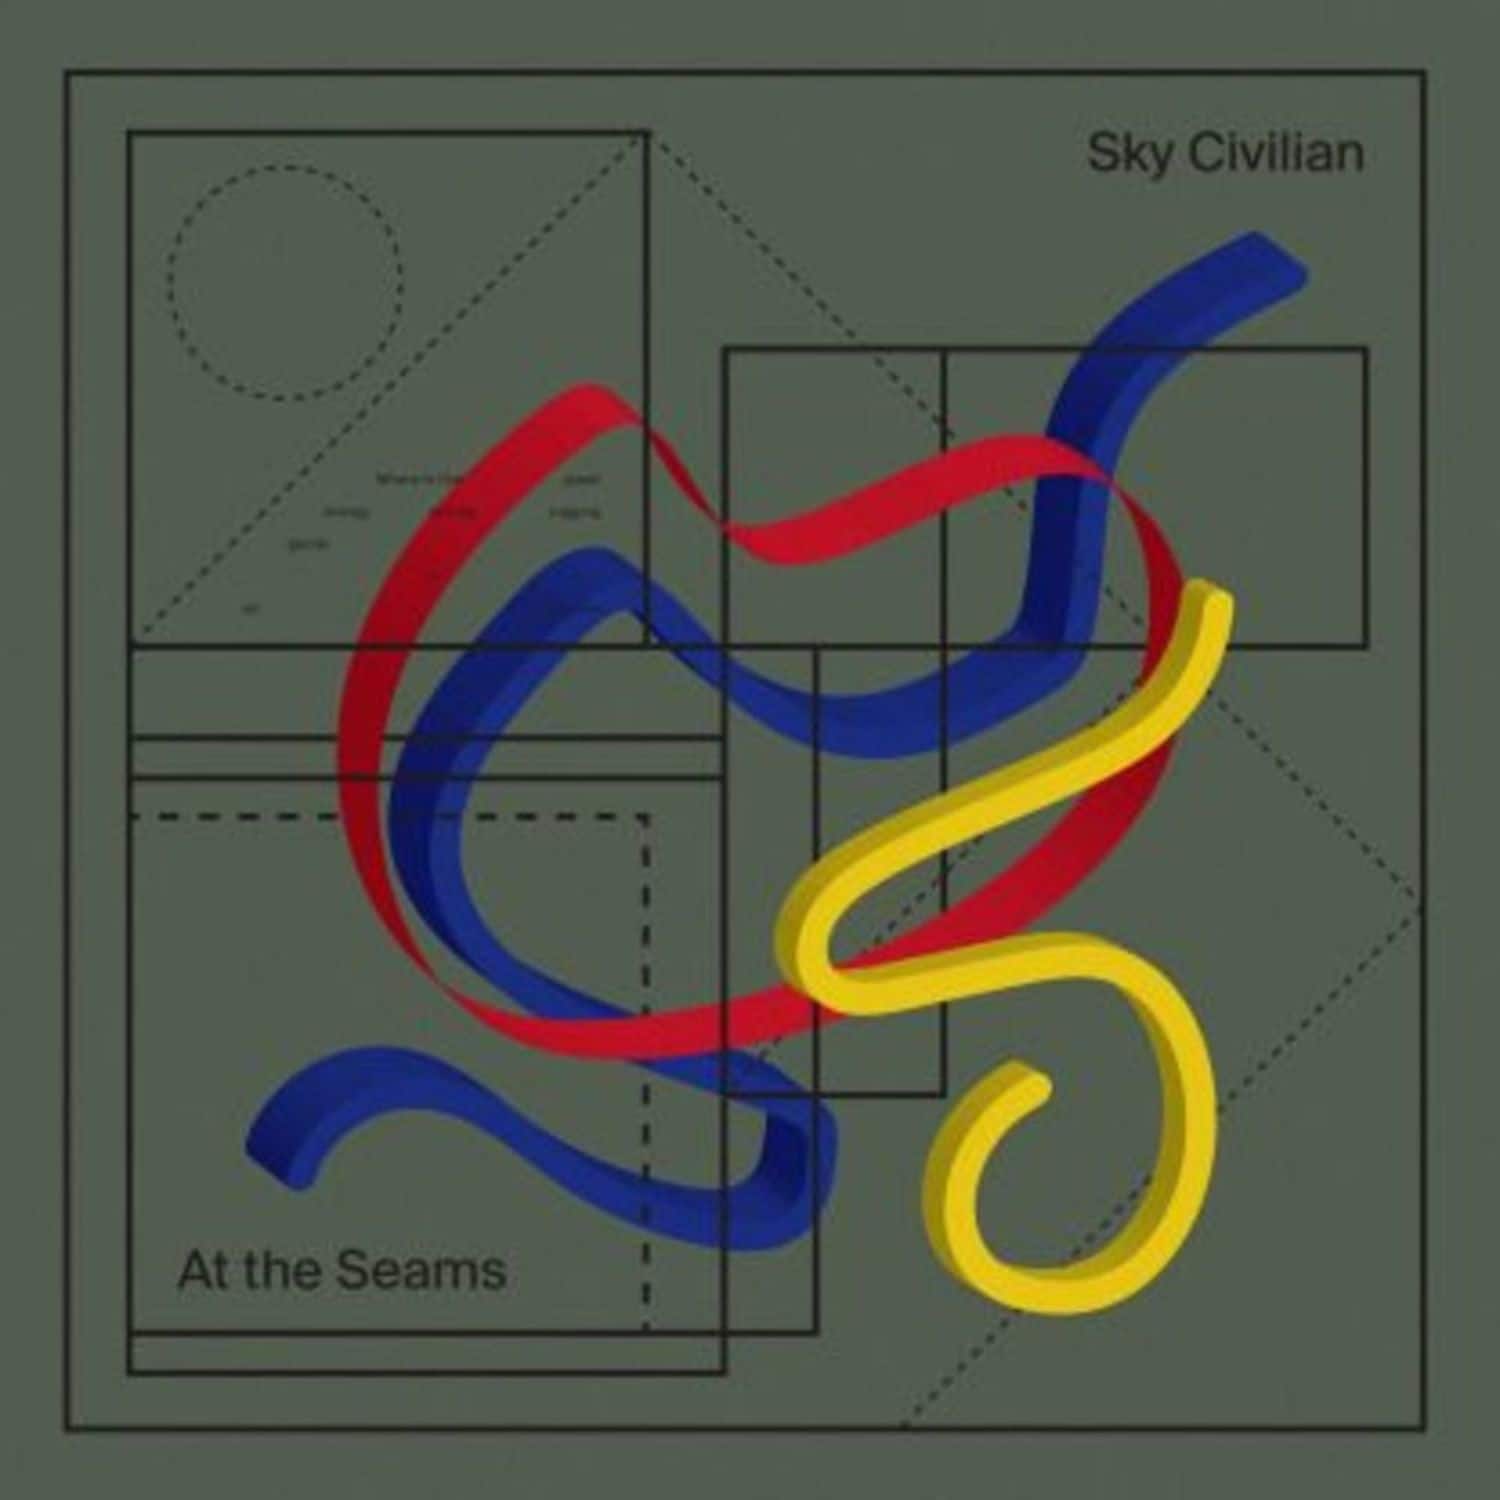 Sky Civilian - AT THE SEAMS